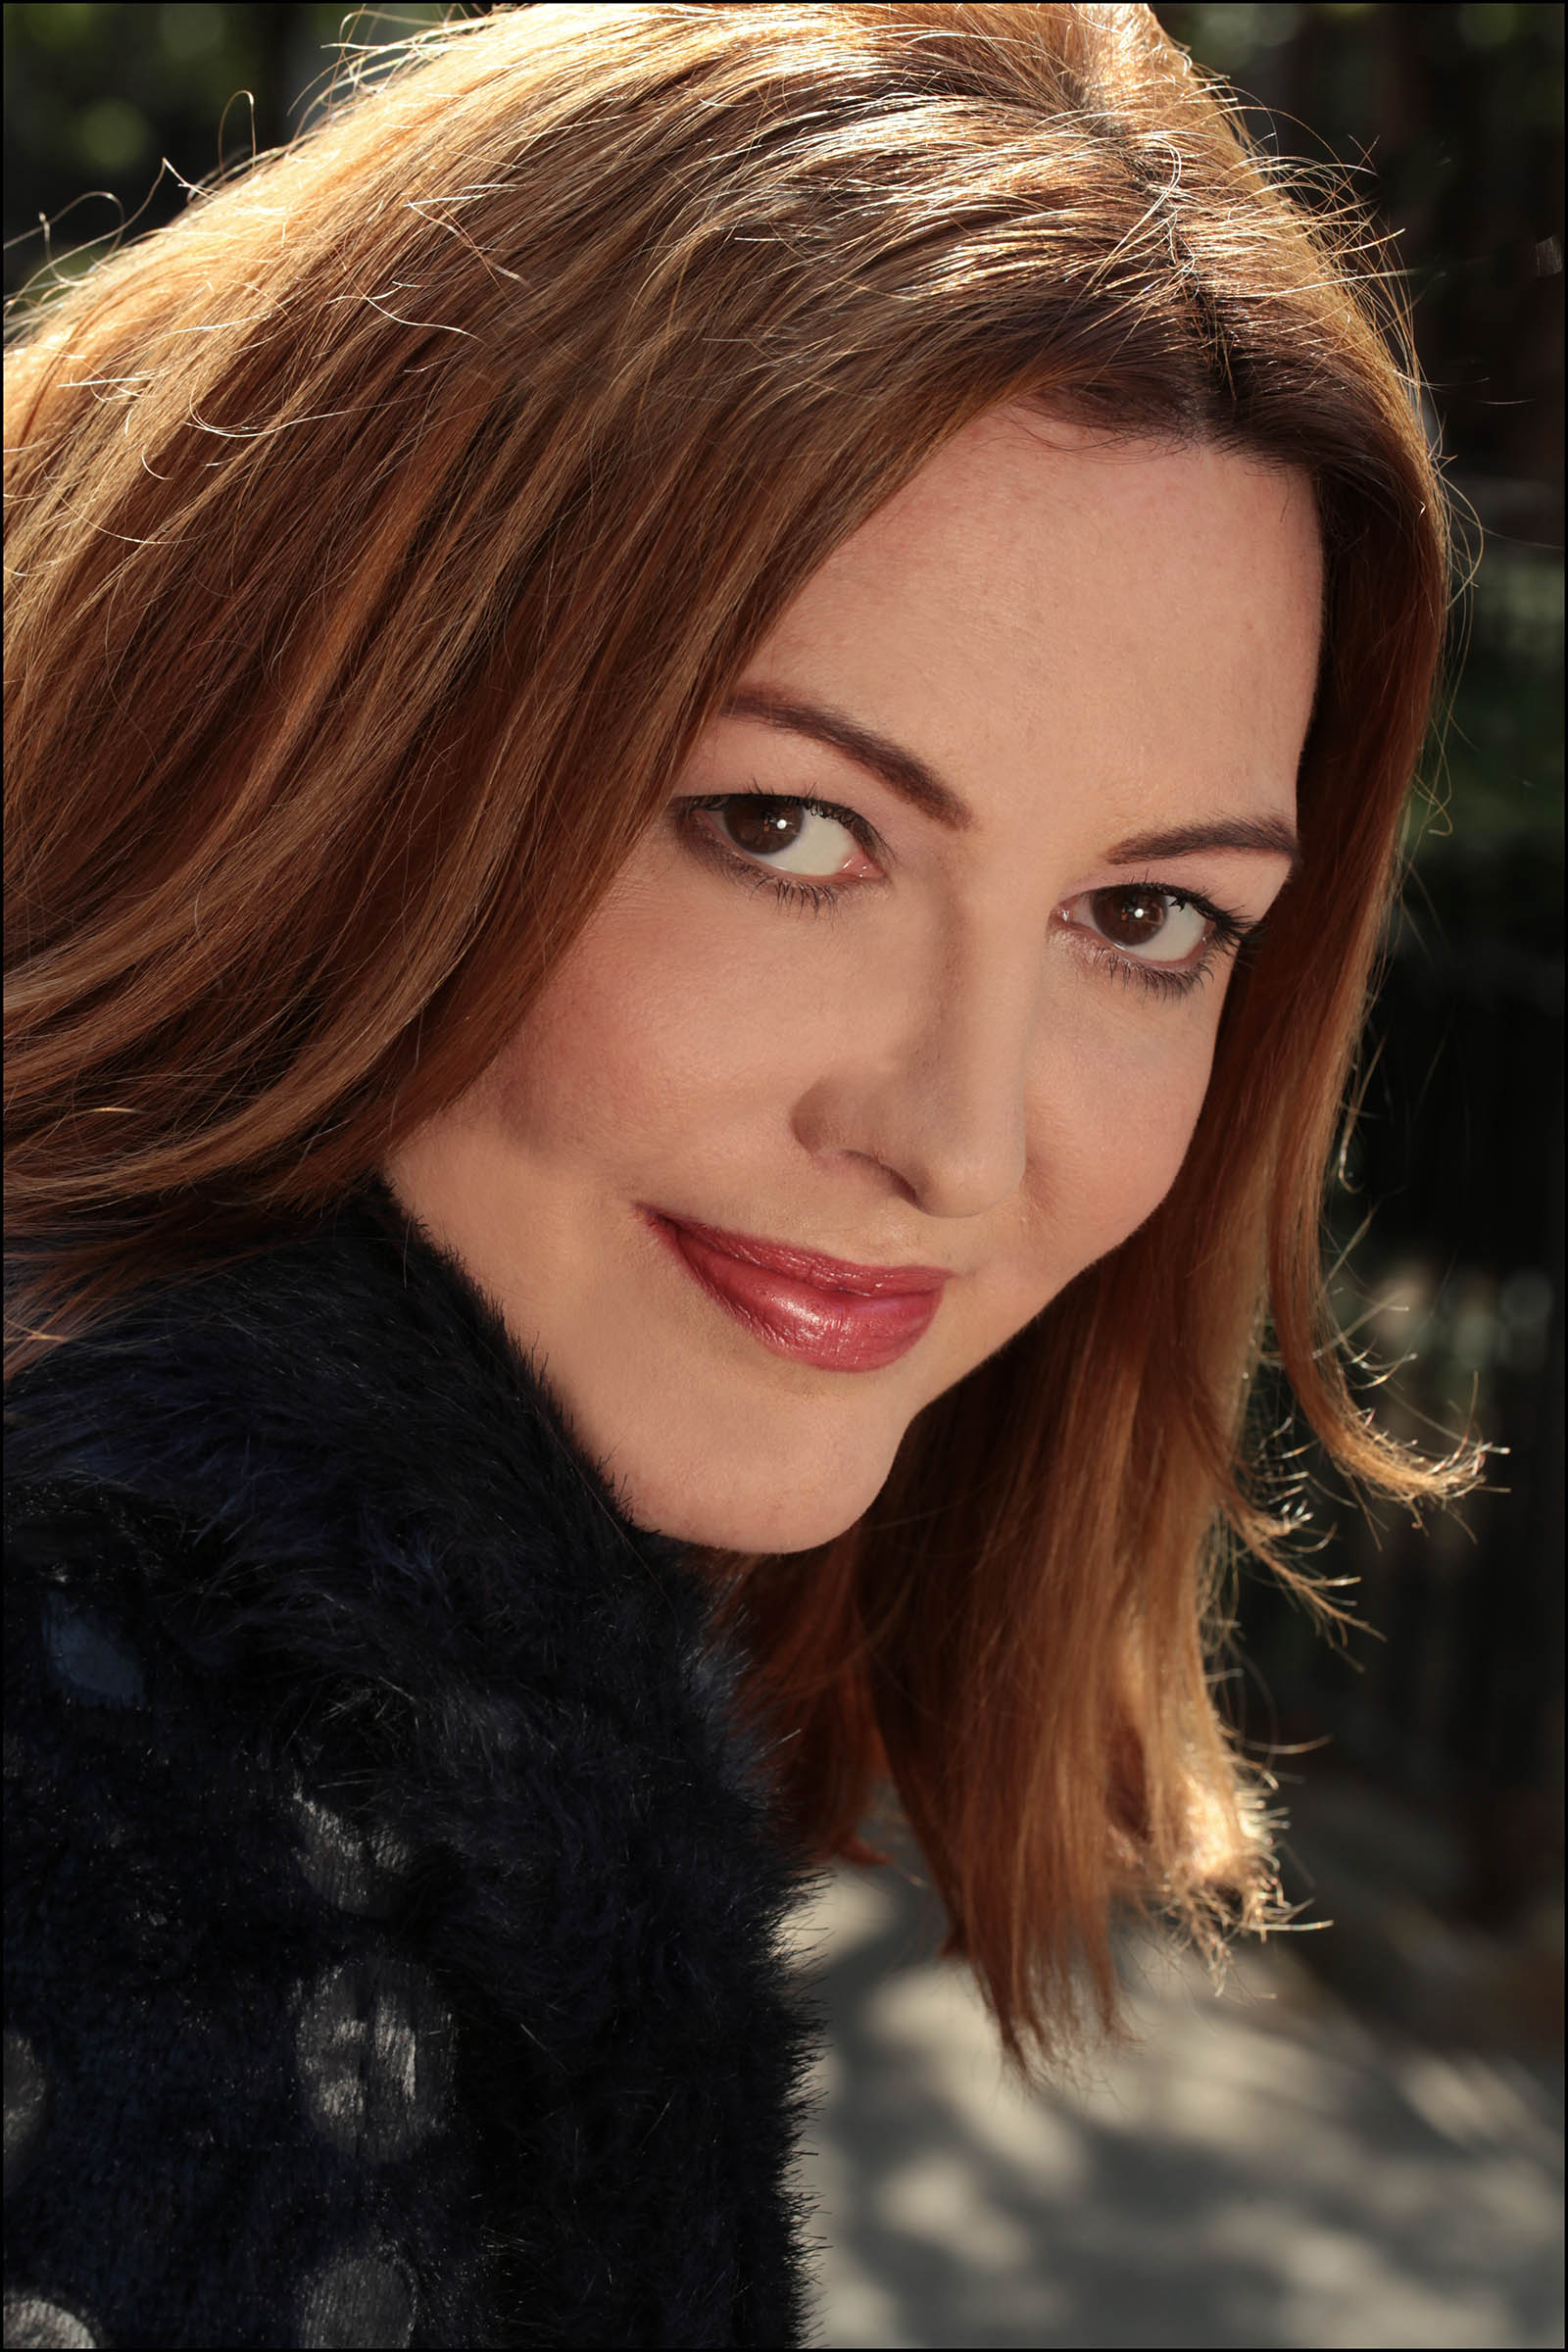 Ms LEONARD, ACTOR Headshot by the Best Professional Corporate Portrait photographer Tess Steinkolk in nyc